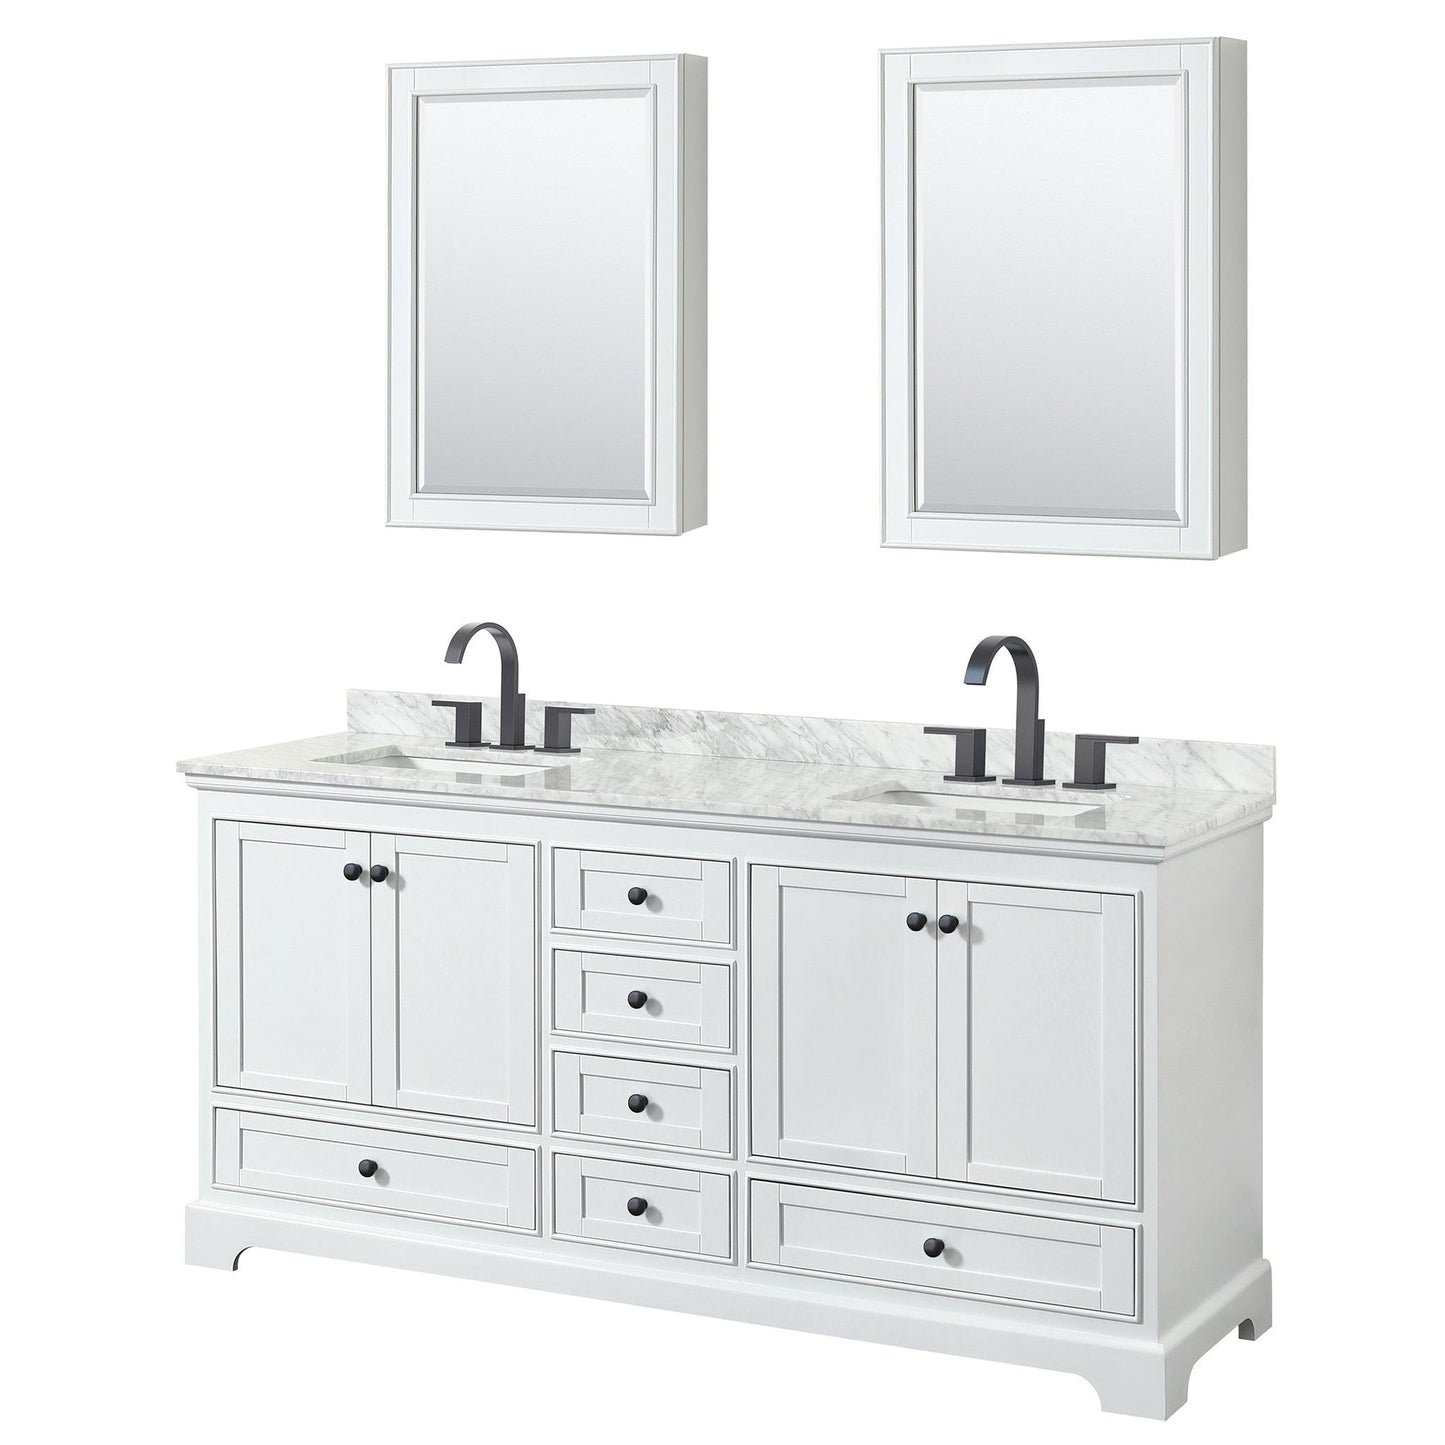 Deborah 72" Double Bathroom Vanity in White, White Carrara Marble Countertop, Undermount Square Sinks, Matte Black Trim, Medicine Cabinets